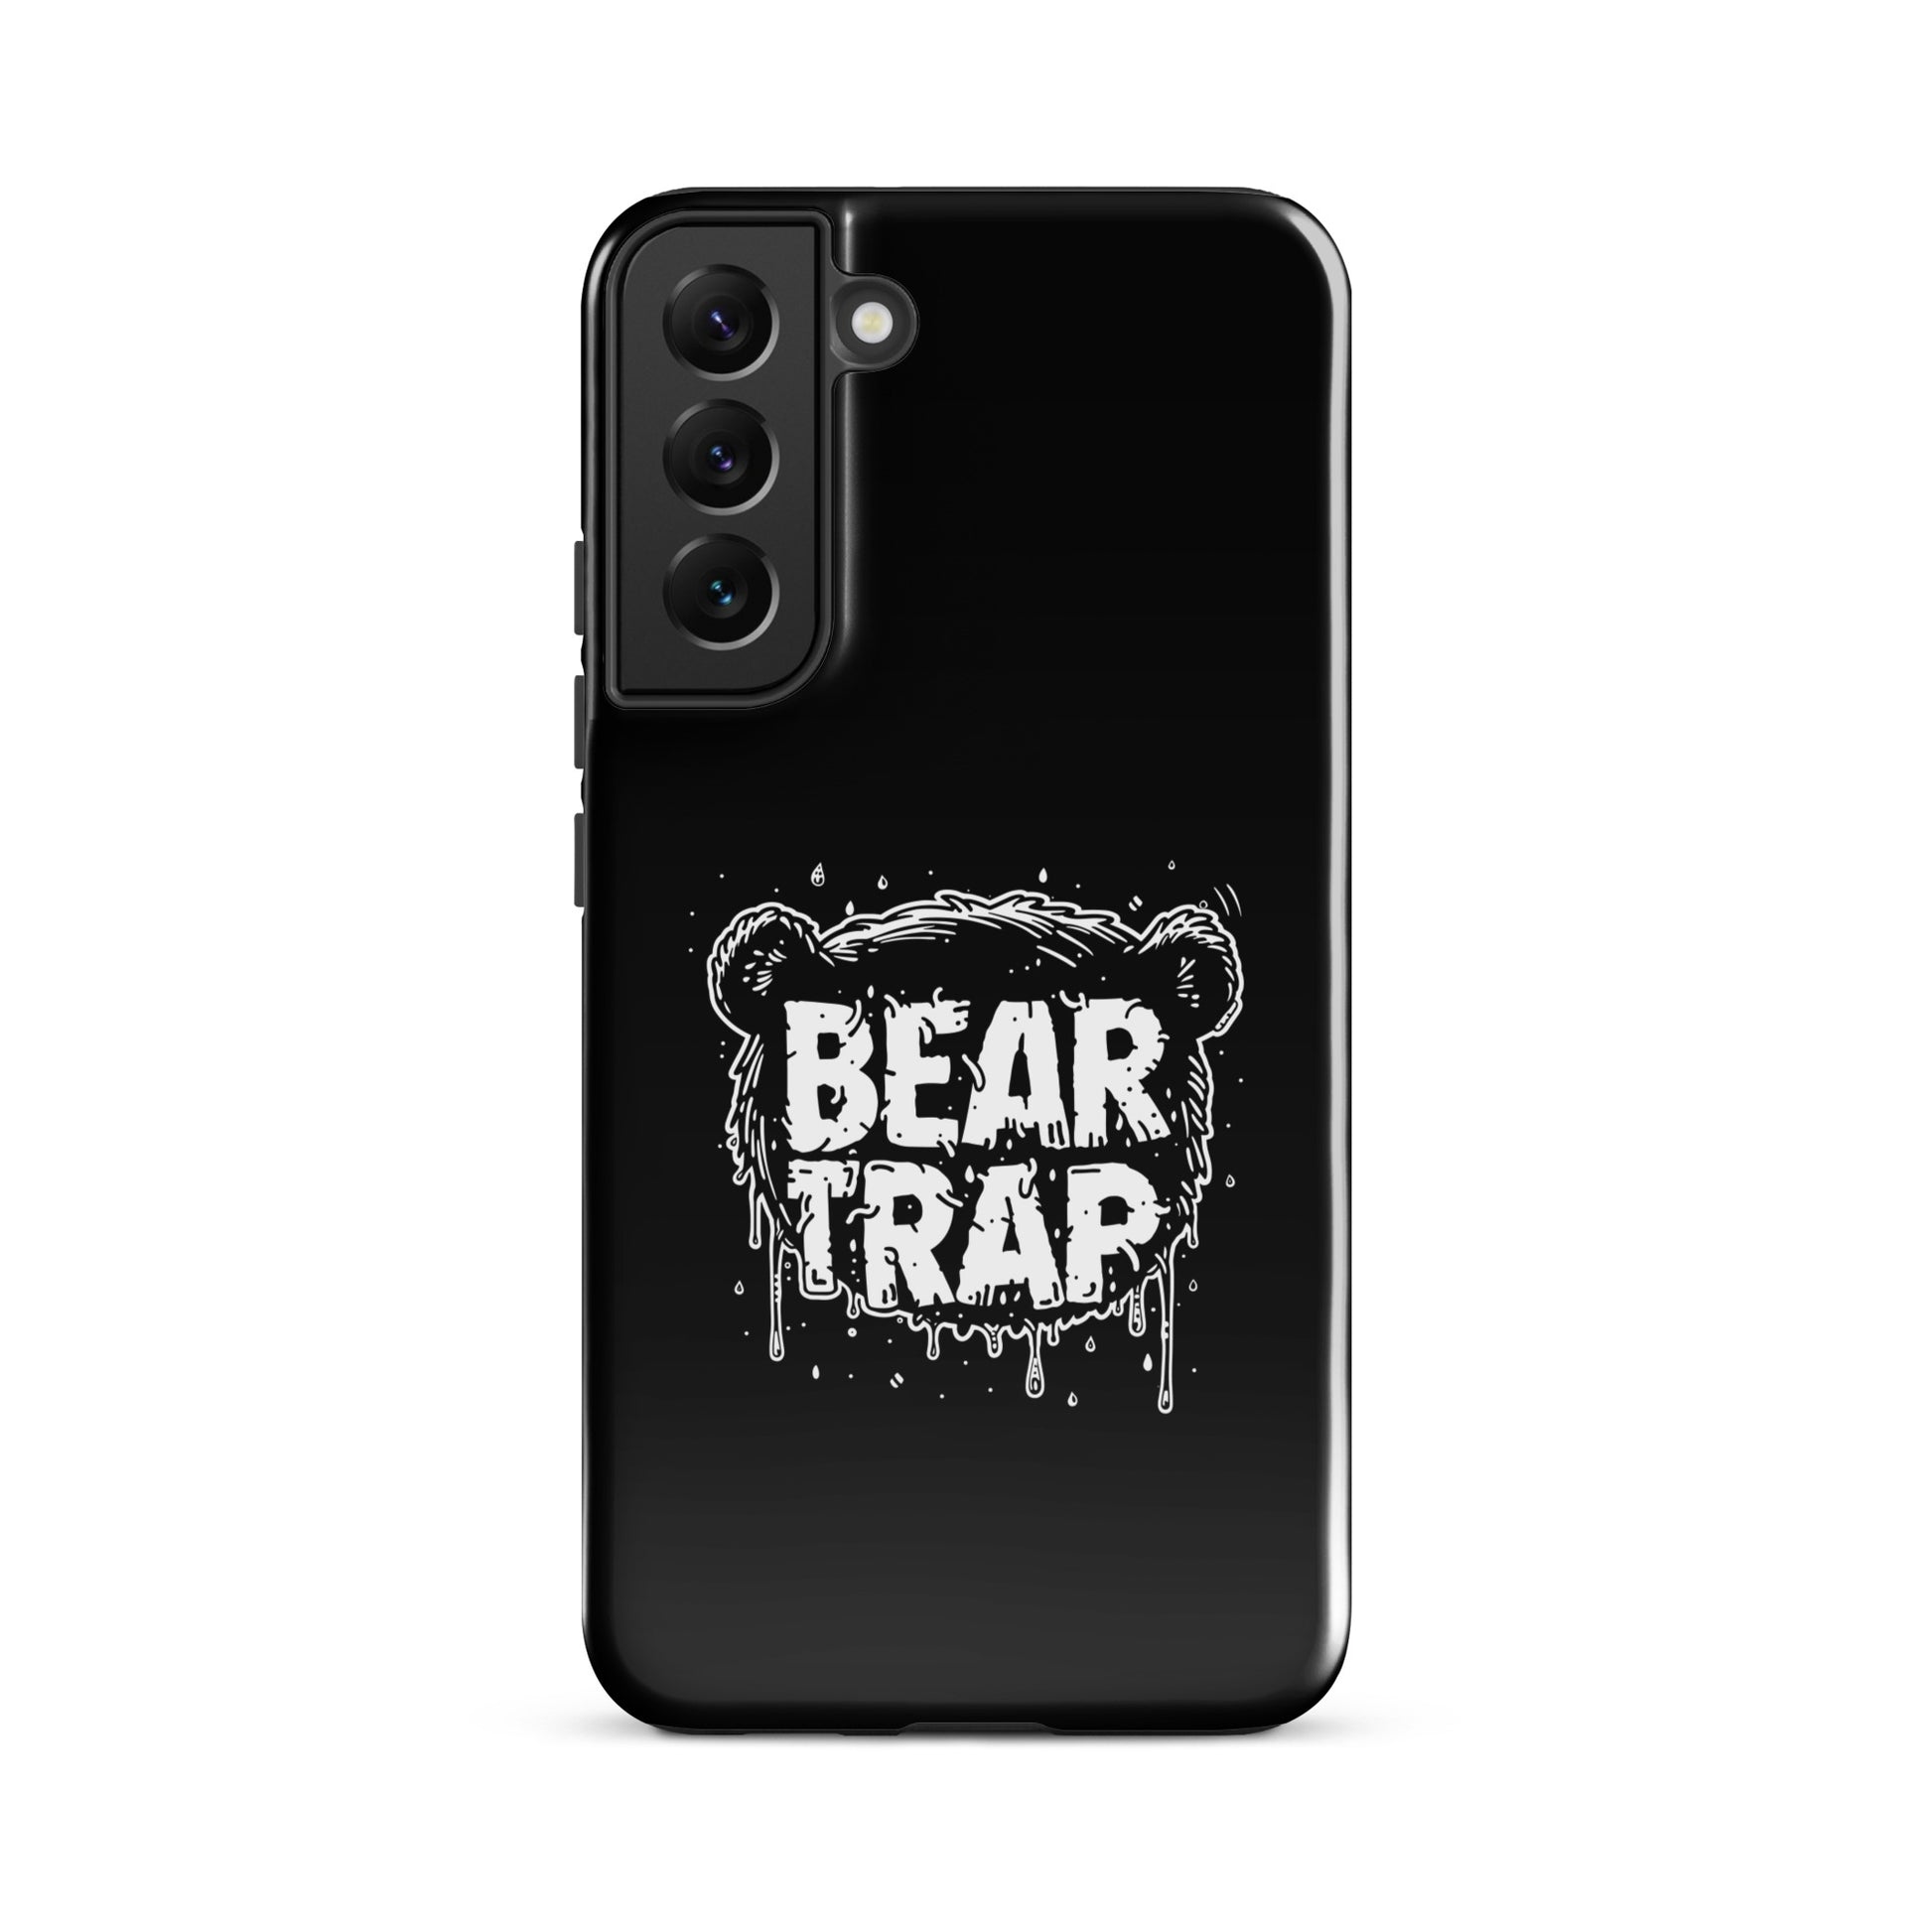 Sassy 'Bear Trap' Graphic Tee - Ultimate Gay Bear Samsung Tough Case